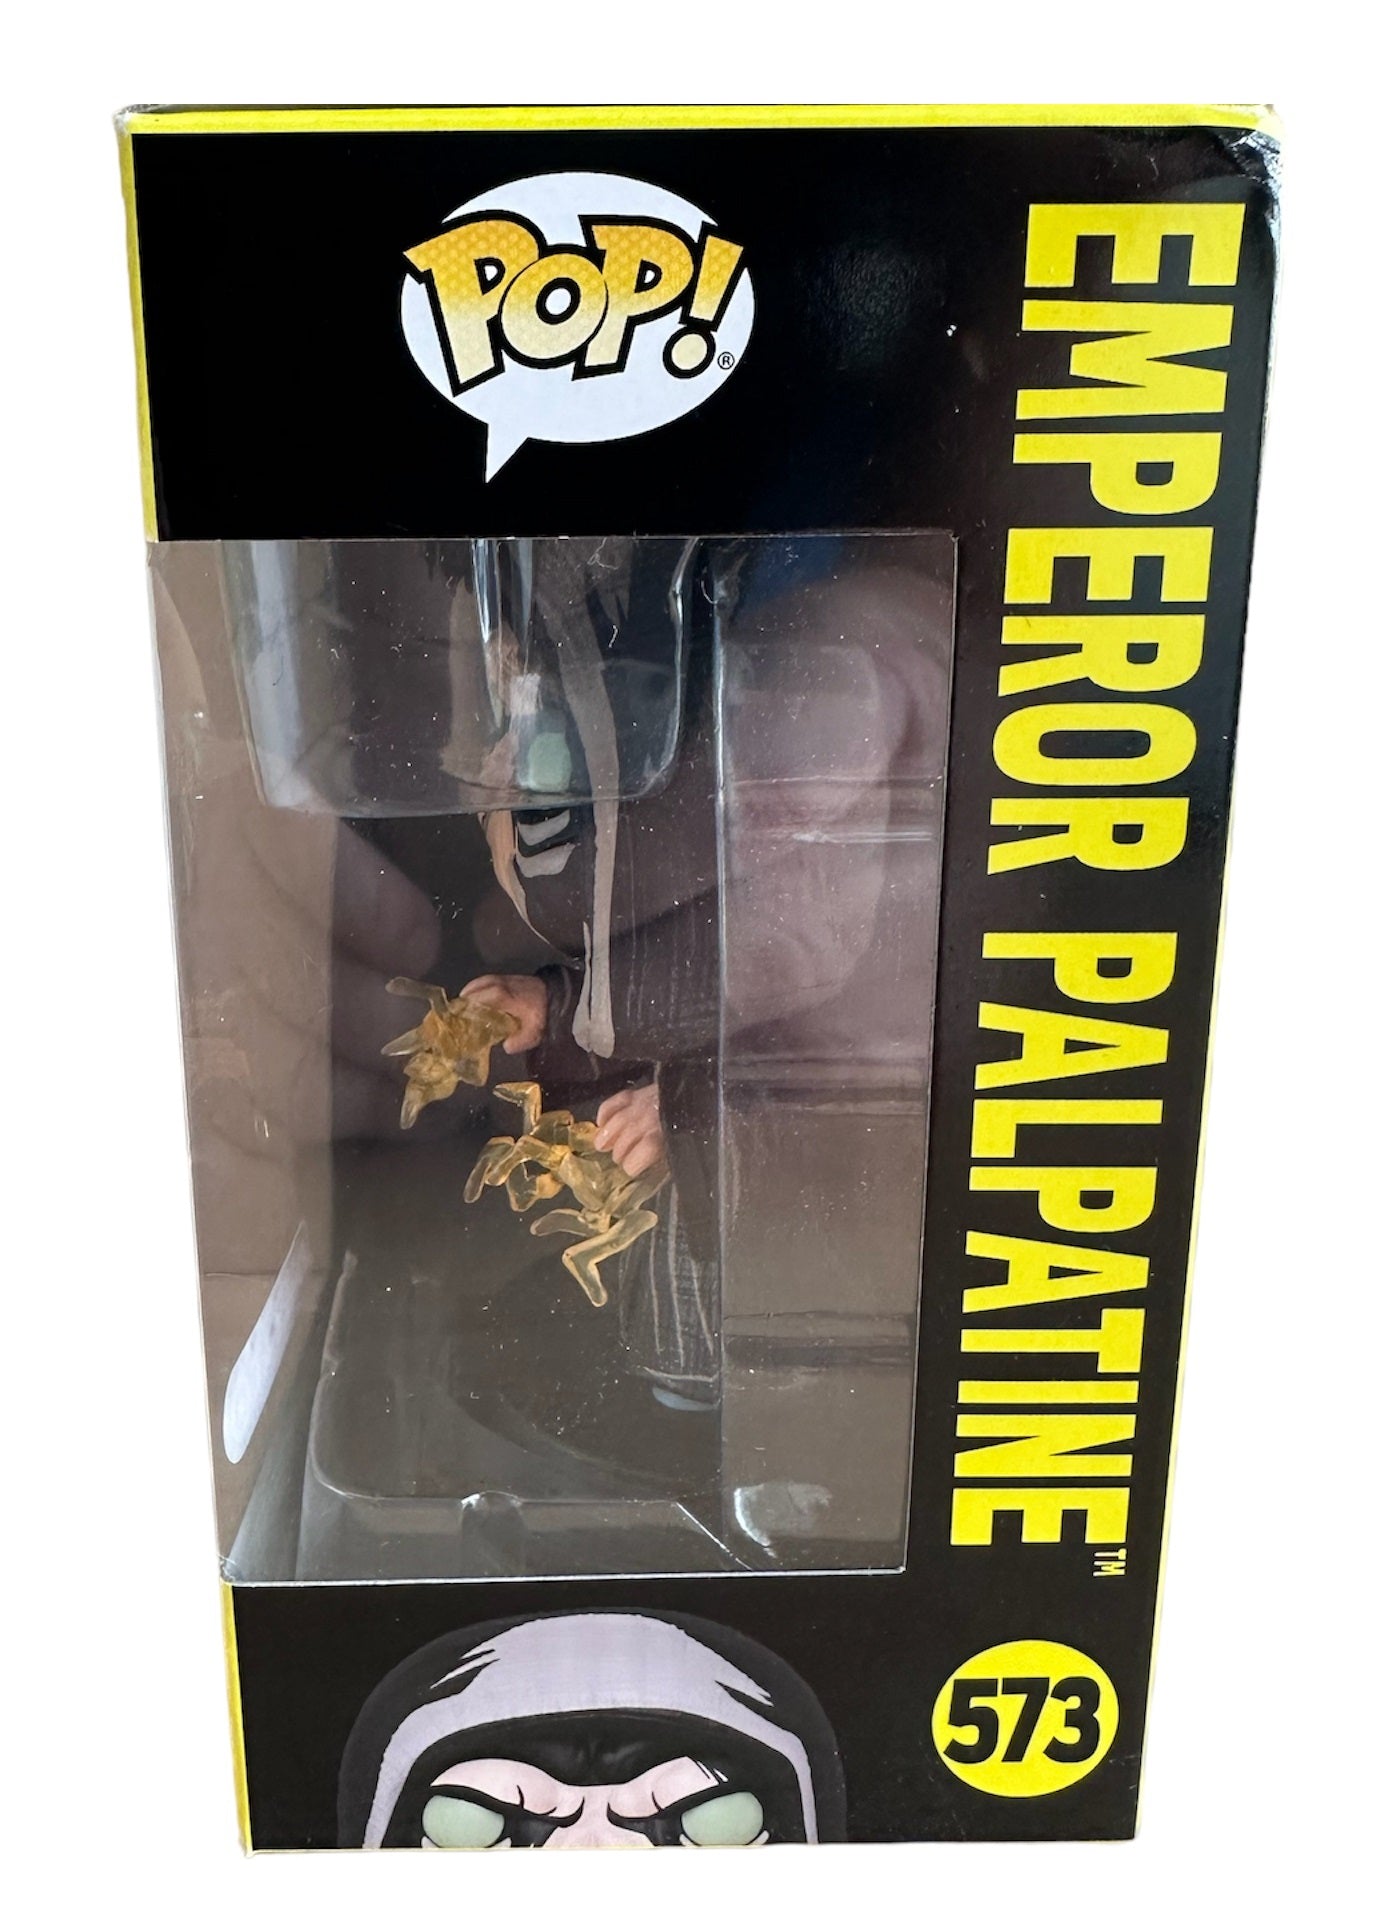 Funko 2022 - Star Wars - Emperor Palpatine Pop Vinyl Bobble Head Figure No. 573 - Target Exclusive - Brand New Factory Sealed6 - Brand New Shop Stock Room Find